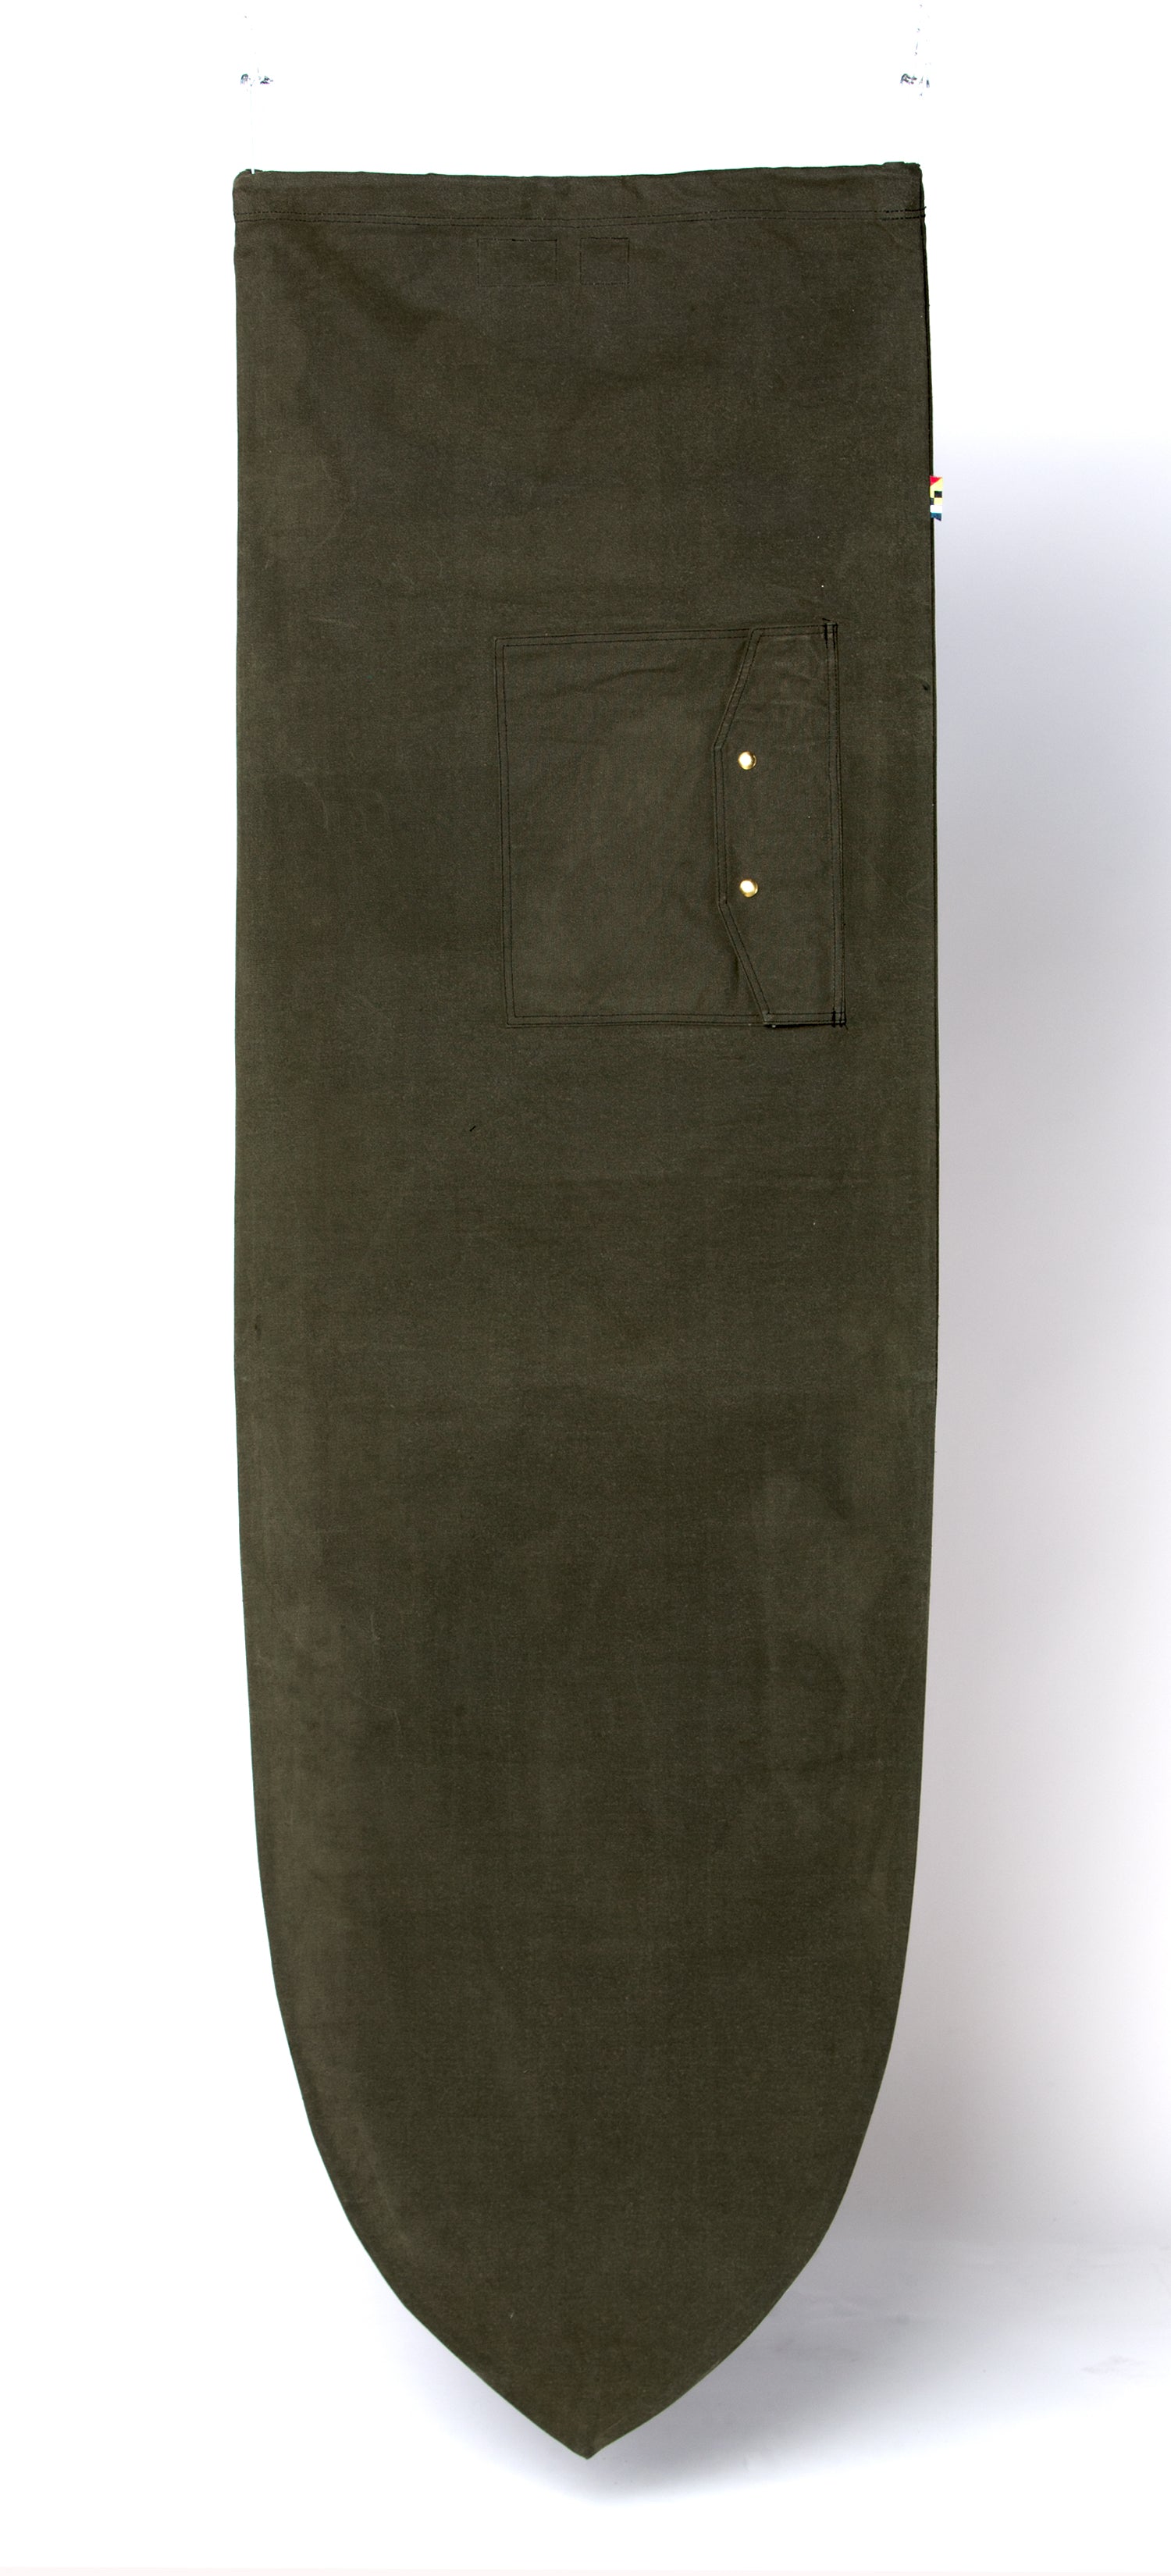 ola canvas bonzer surfboard board bag military green - back